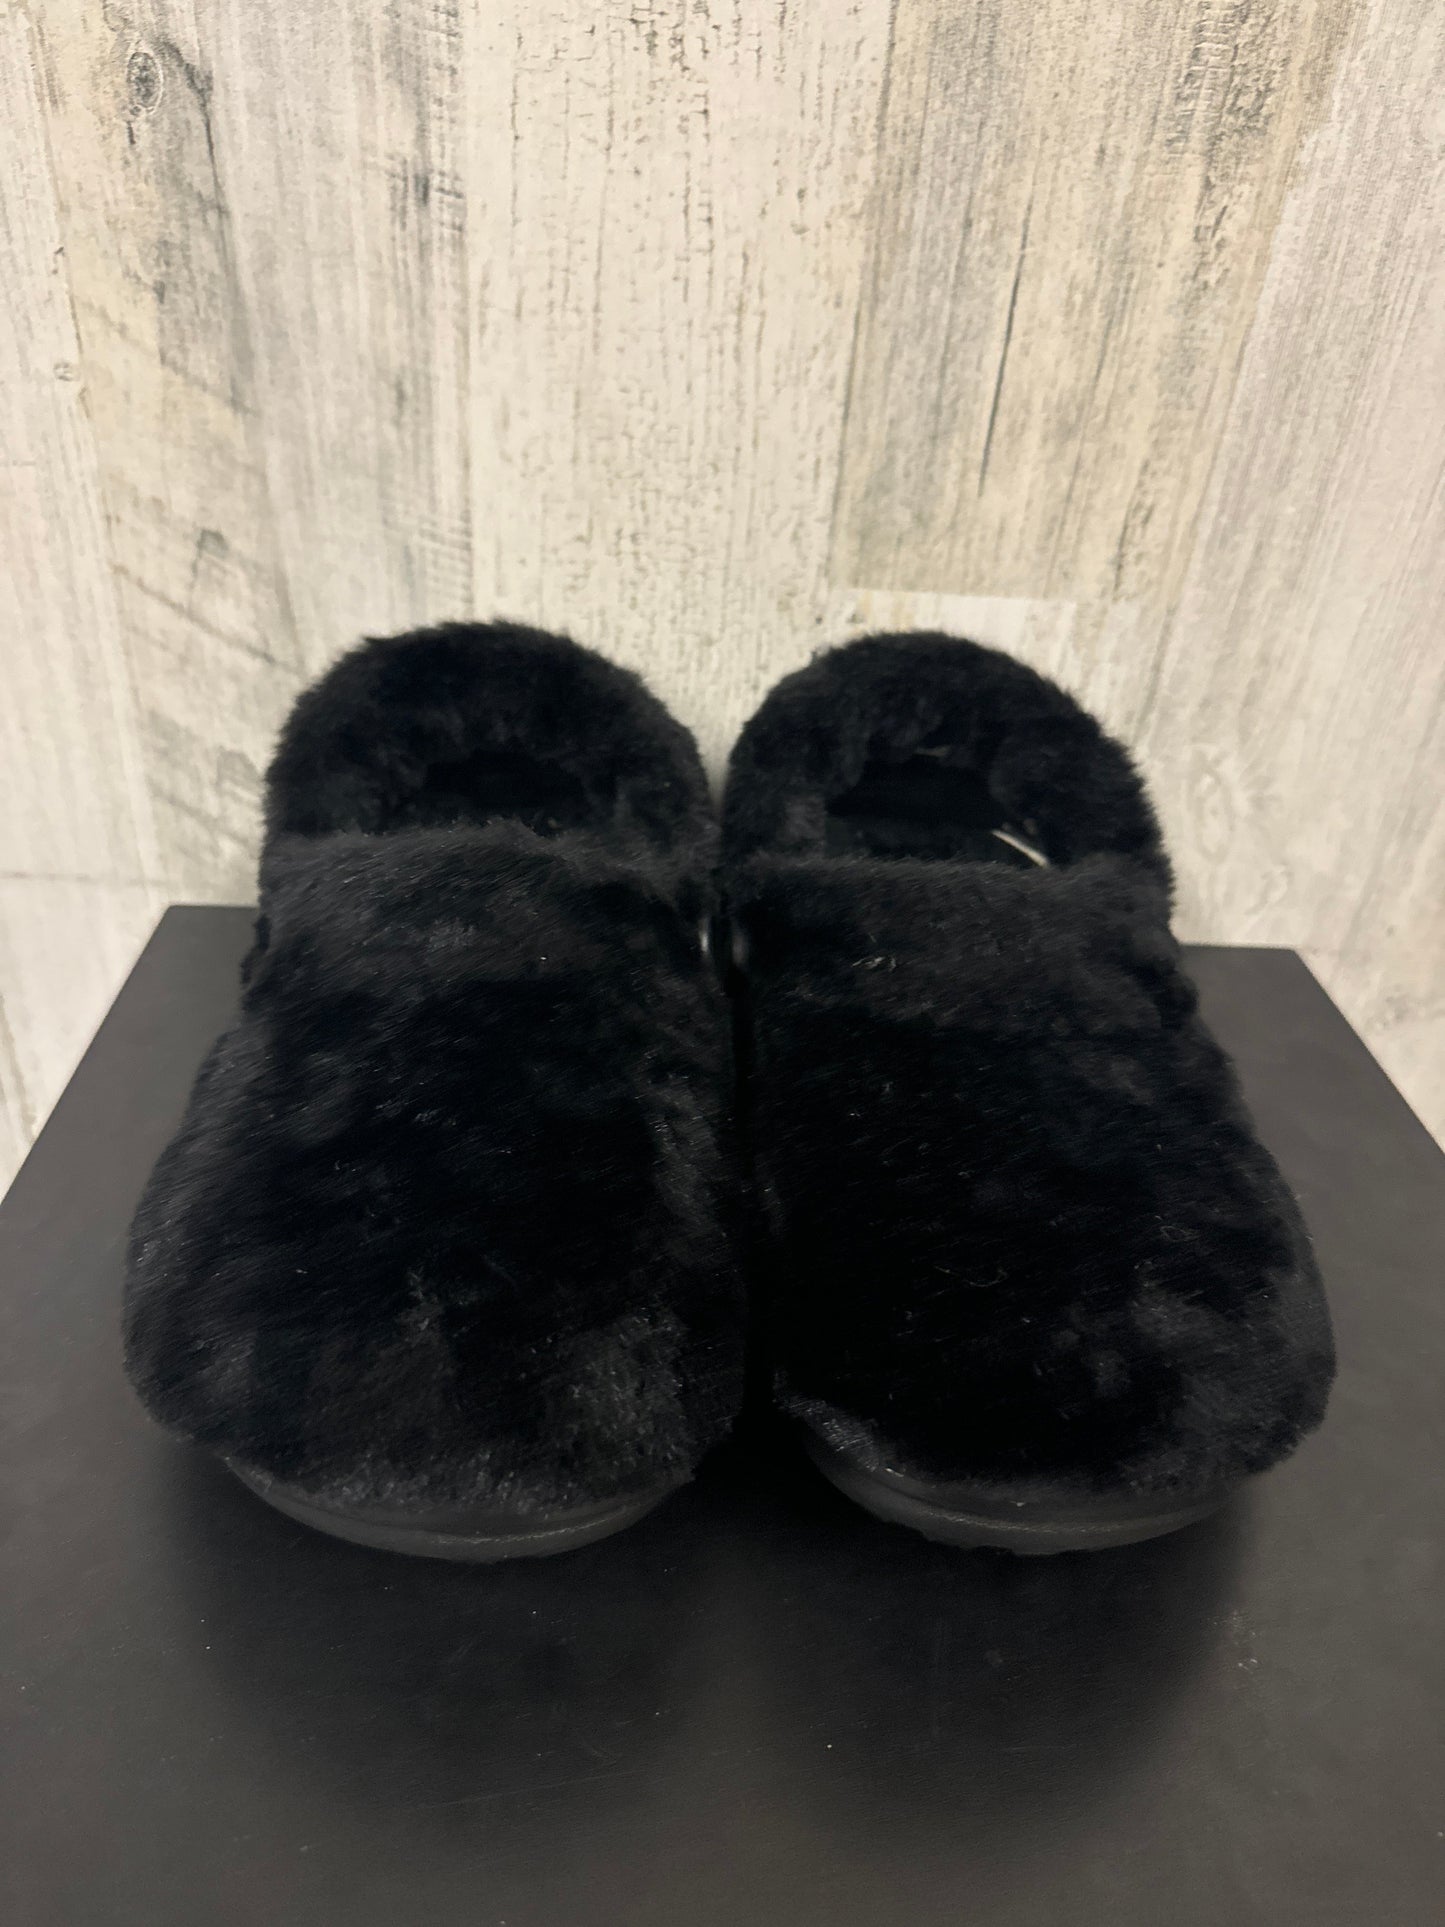 Black Shoes Flats Crocs, Size 7